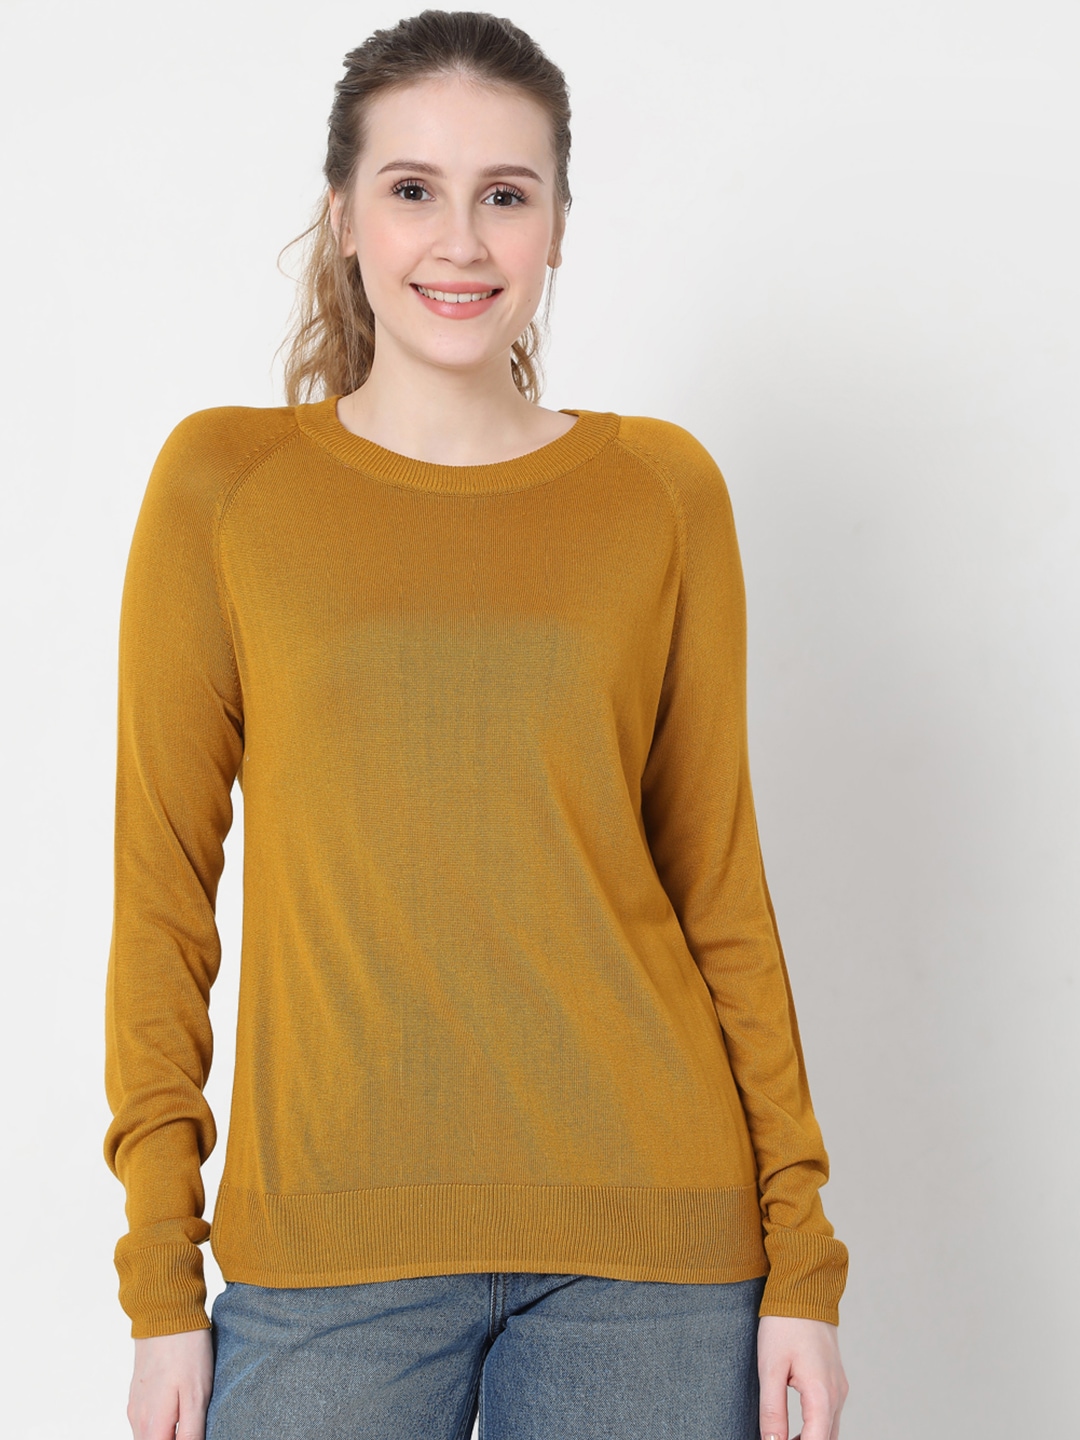 Vero Moda Women Mustard Pullover Sweater Price in India